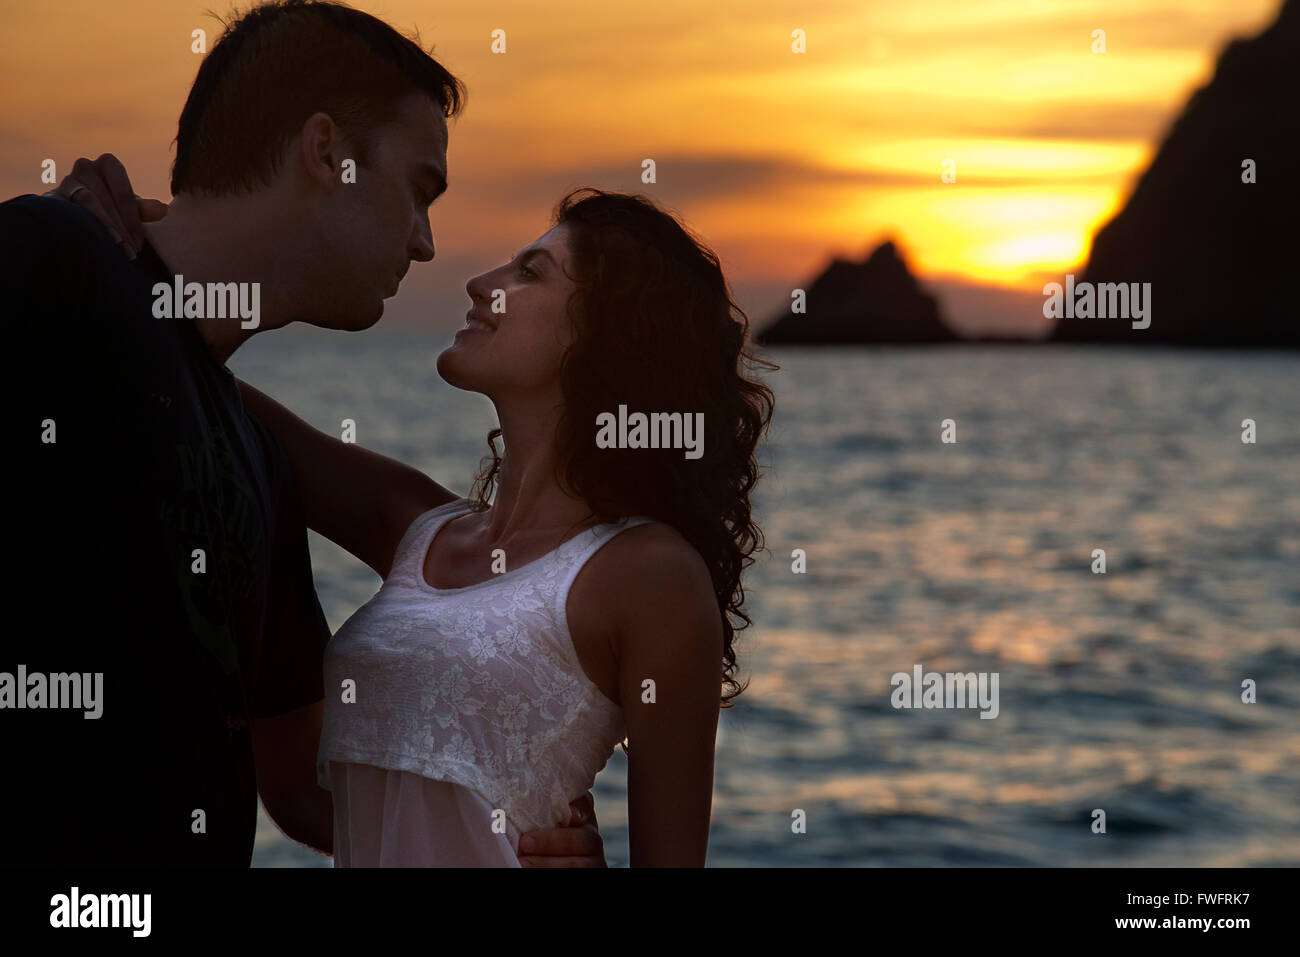 Paar liebenden küssen bei Sonnenuntergang am Strand. Kantiang Bay. Koh Lanta. Thailand. Asien. Kantiang Bucht ist berühmt als der l. Stockfoto